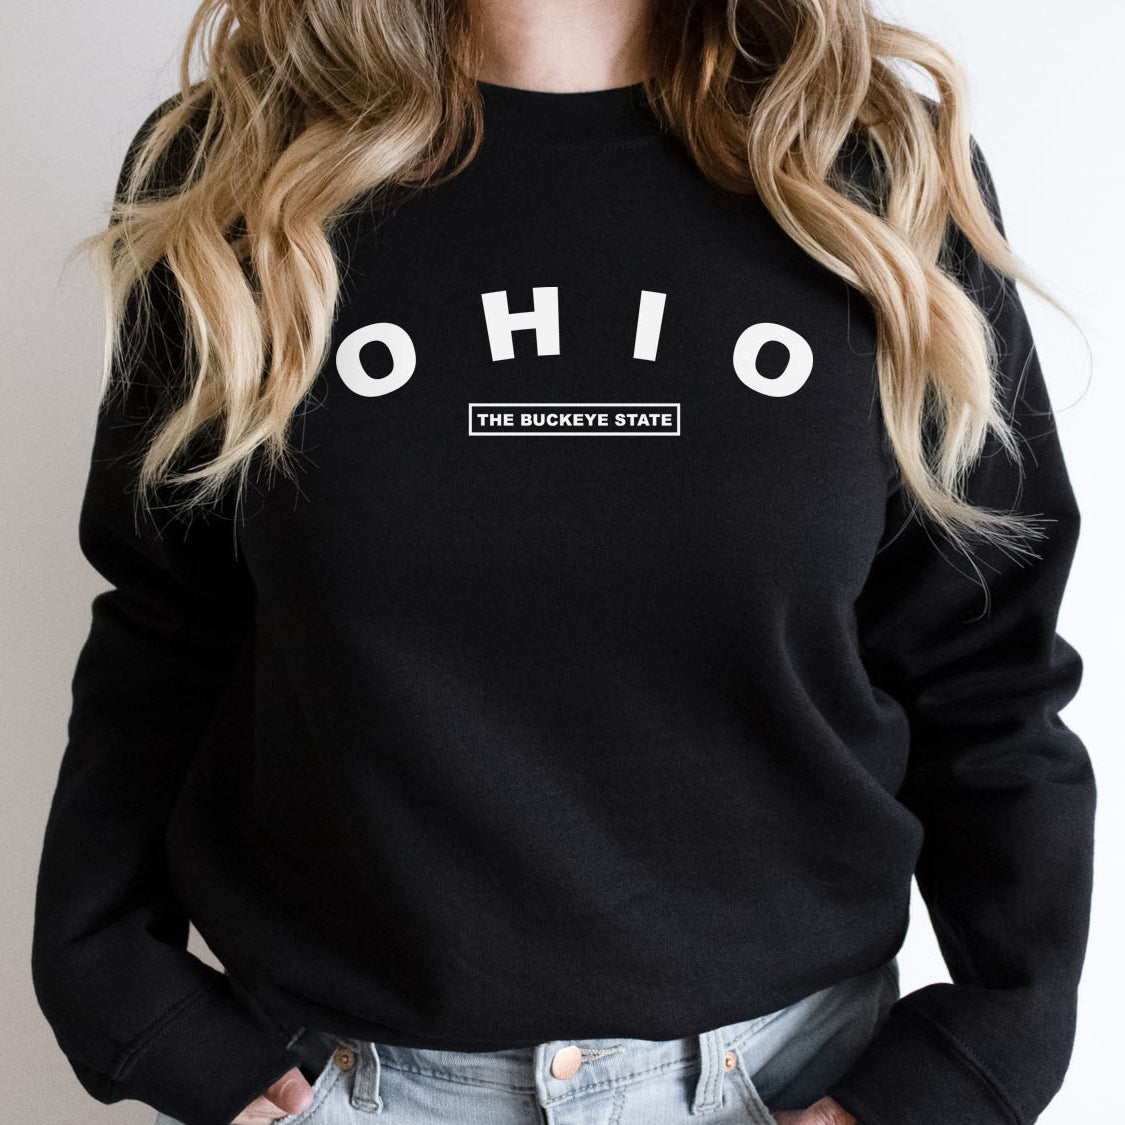 Ohio The Buckeye State Sweatshirt - United States Name & Slogan Minimal Design Printed Sweatshirt